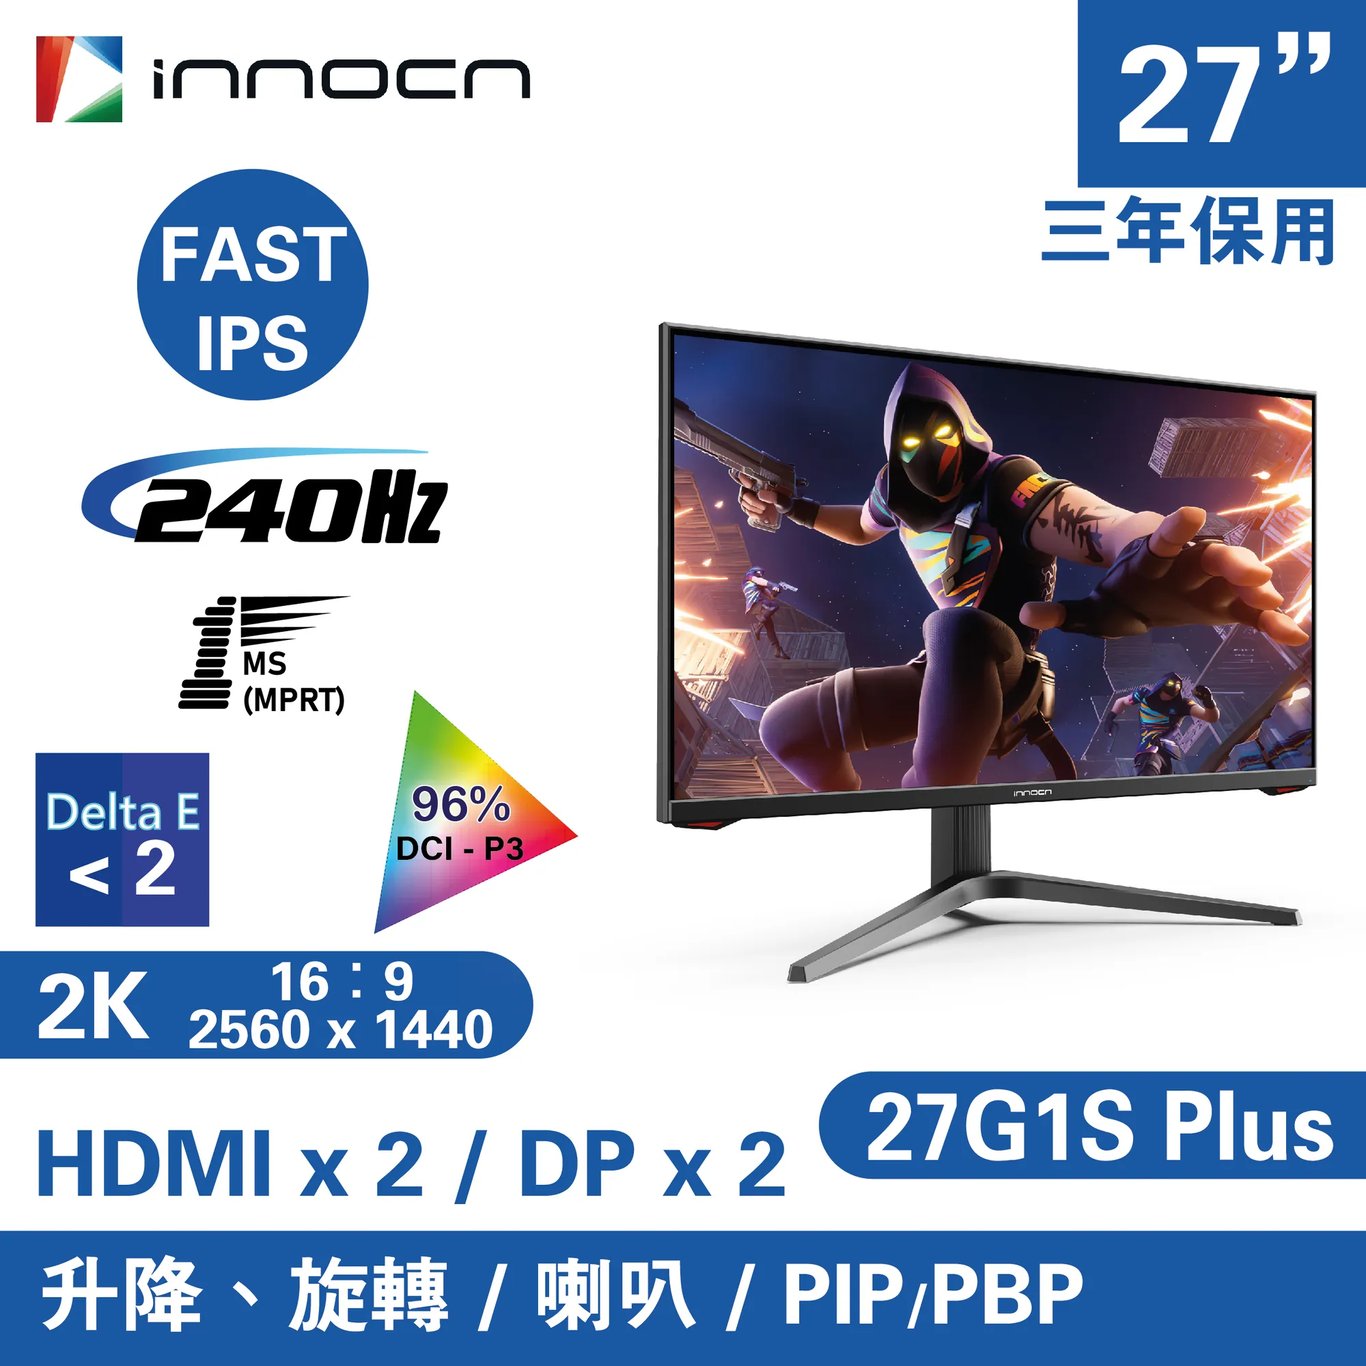 INNOCN 27G1S Plus 電競顯示器 (27吋 / WQHD / 240Hz / Fast IPS / FreeSync / HDMI 2.1) - 2560 x 1440